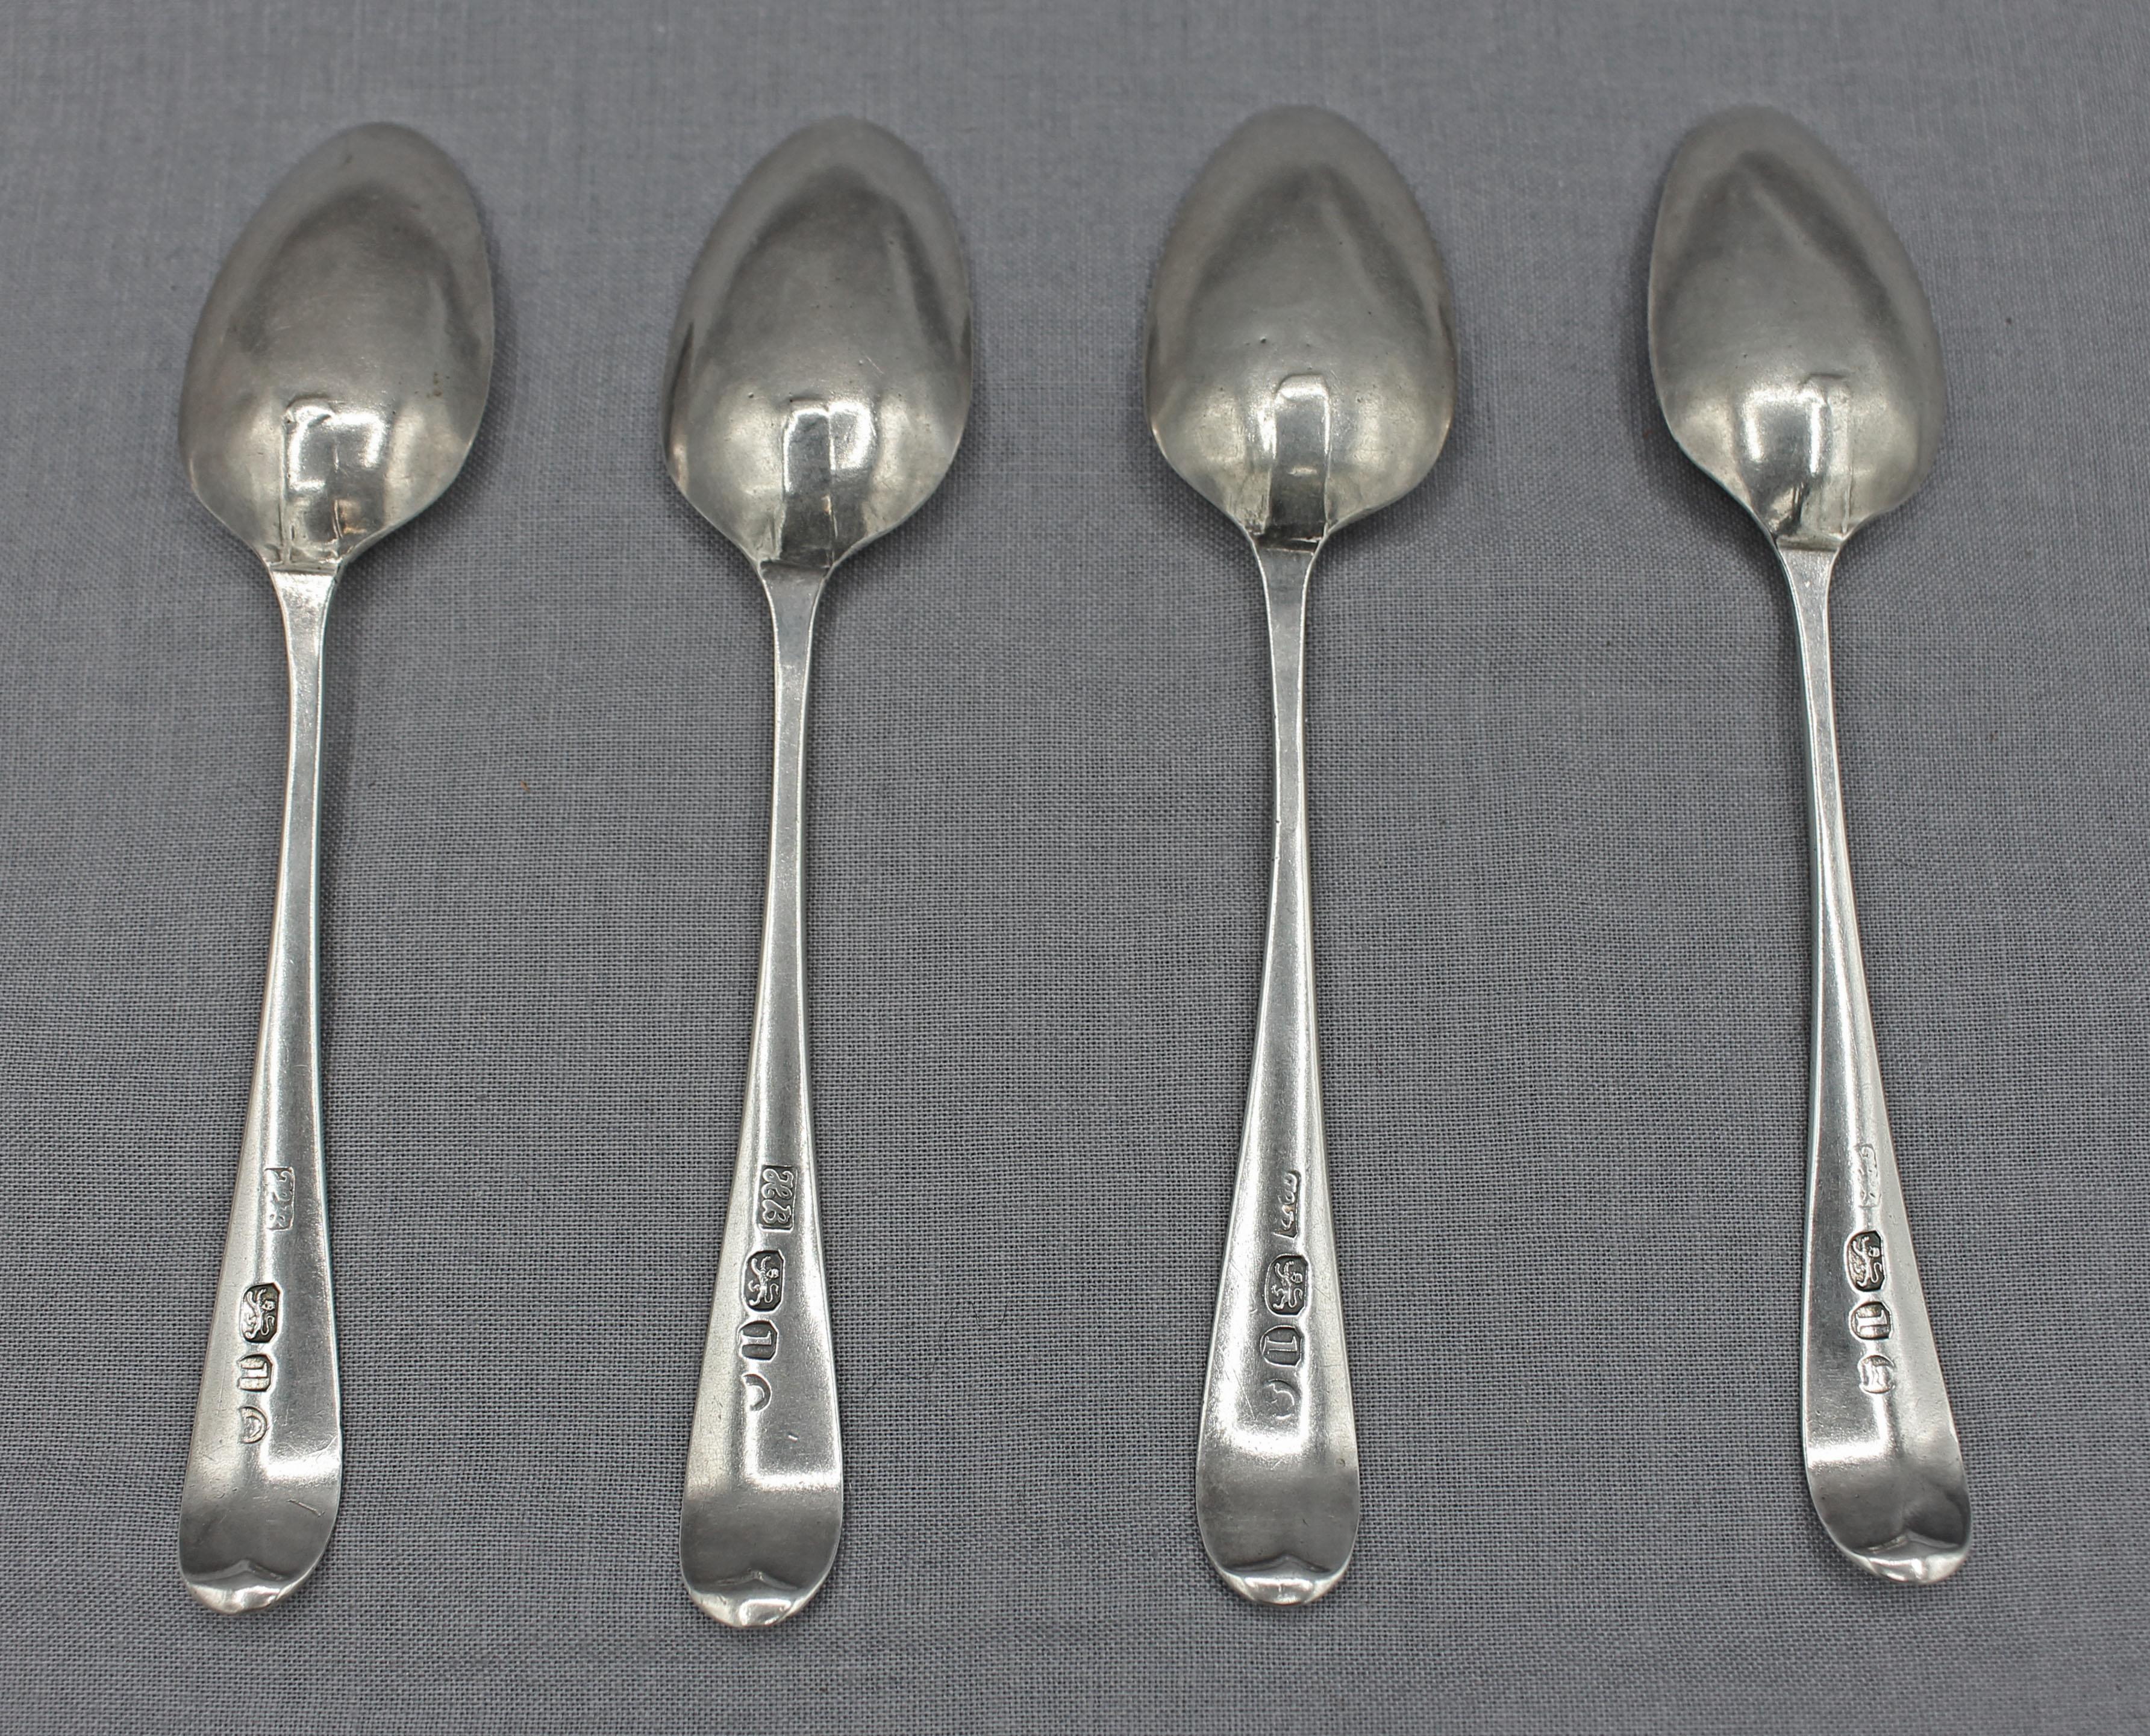 Set of 4 Hester Bateman sterling silver coffee spoons, London, 1786. Old English pattern. Full sterling hallmarks. Light rubbing of some marks. Monogram 